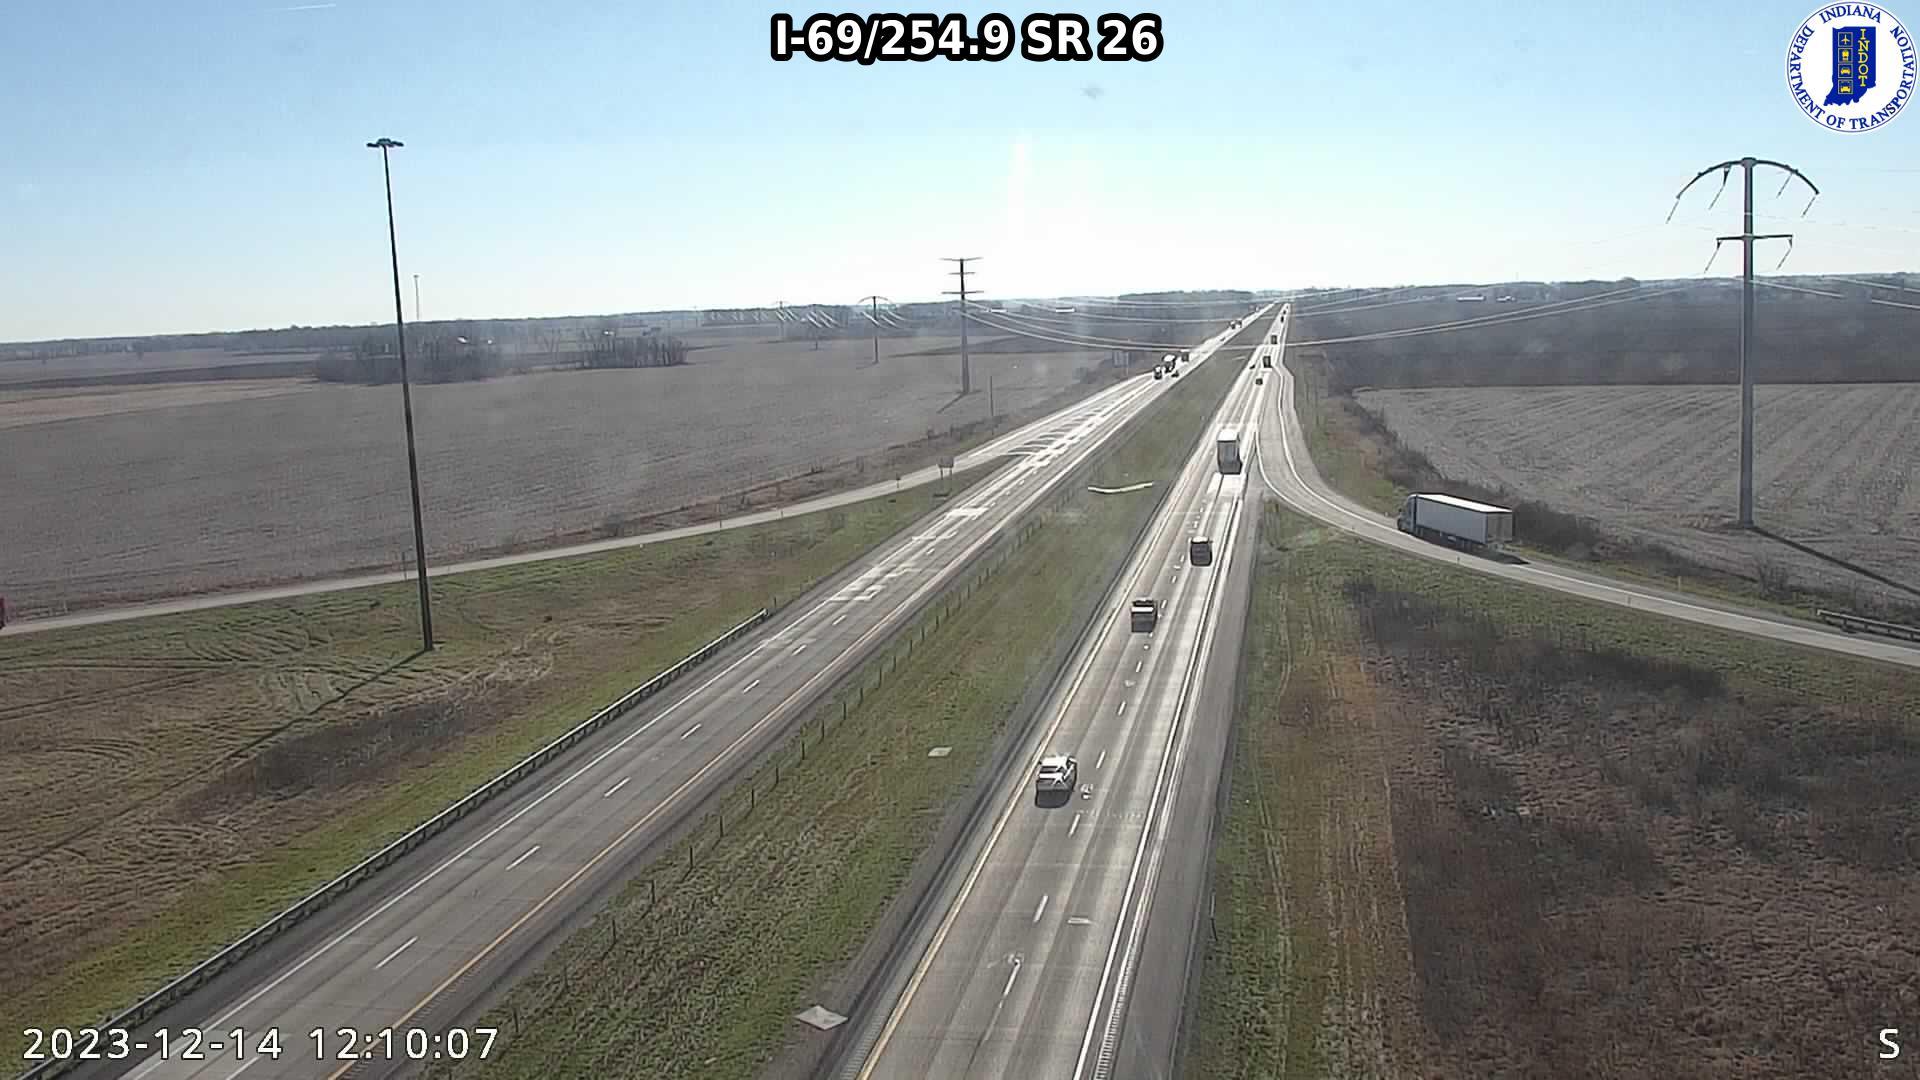 Fowlerton: I-69: I-69/254.9 SR Traffic Camera